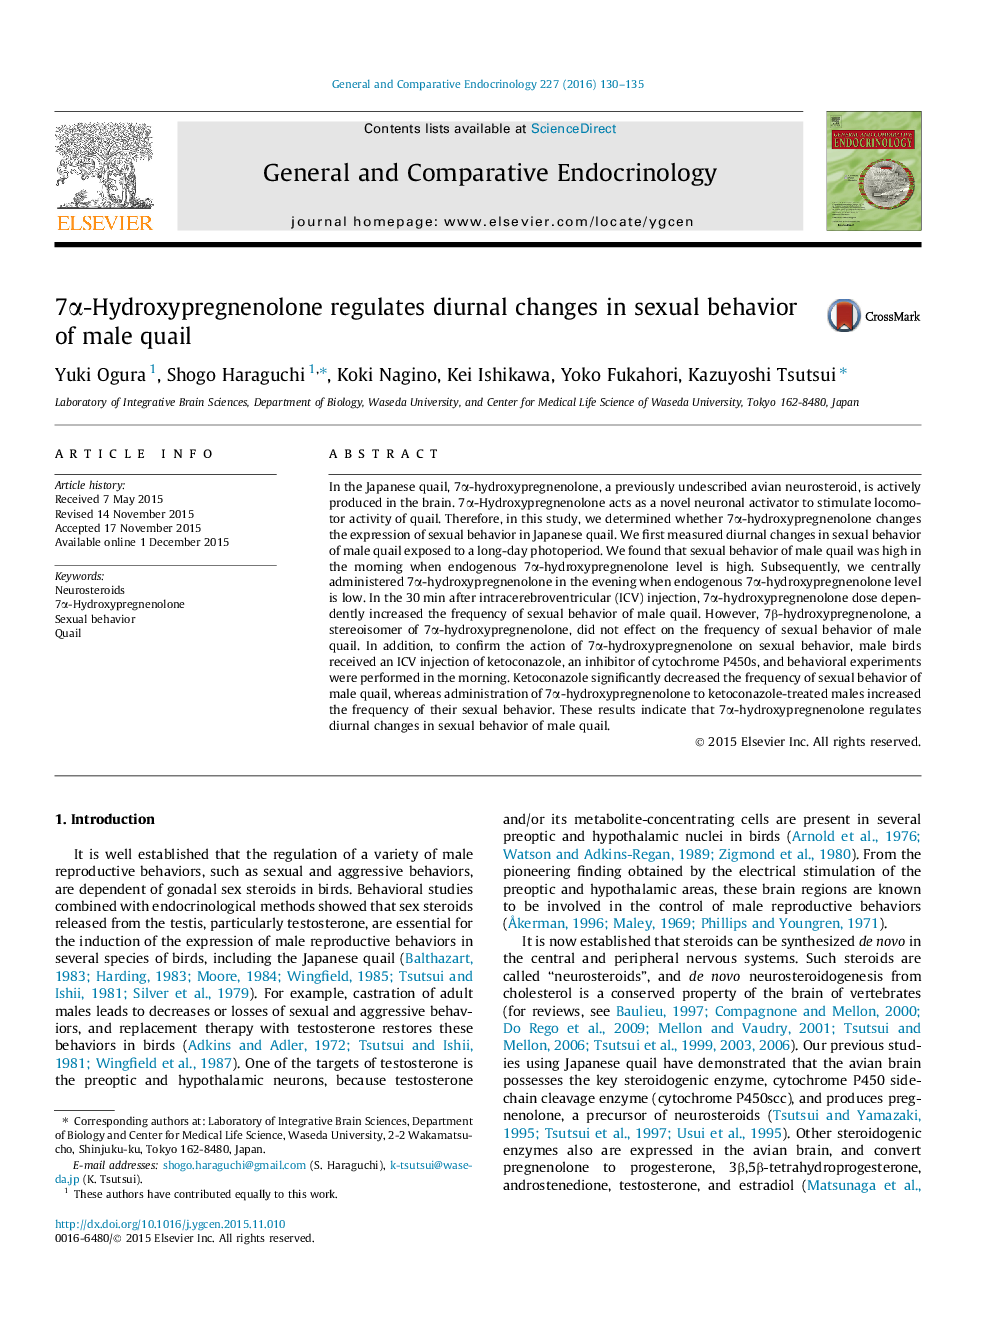 7Î±-Hydroxypregnenolone regulates diurnal changes in sexual behavior of male quail